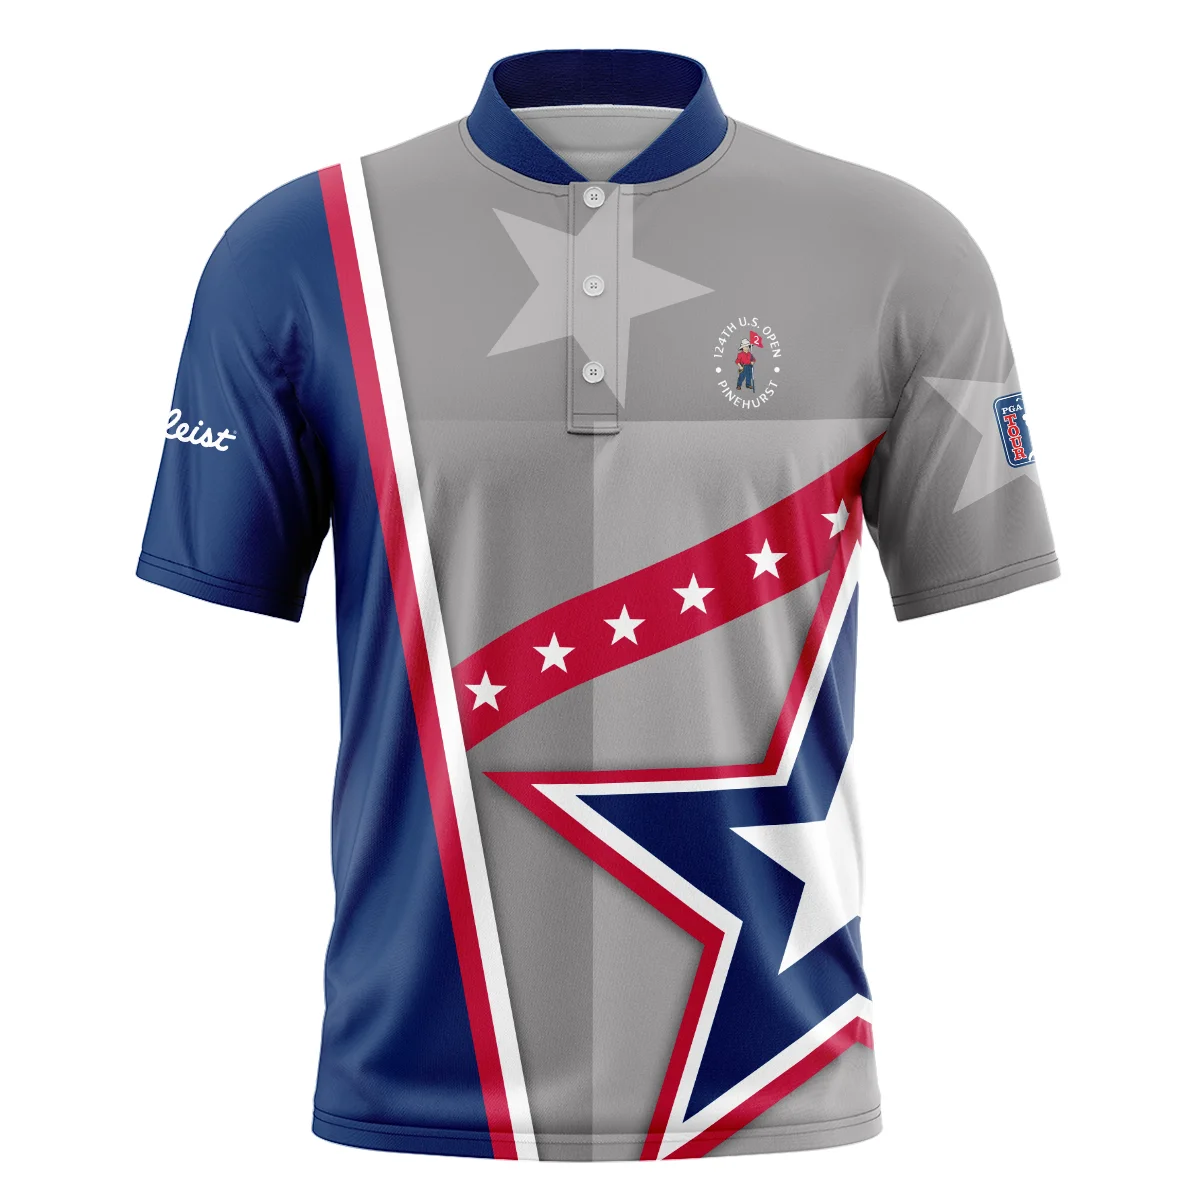 124th U.S. Open Pinehurst Titleist White Star Red Line Blue  Vneck Polo Shirt Style Classic Polo Shirt For Men